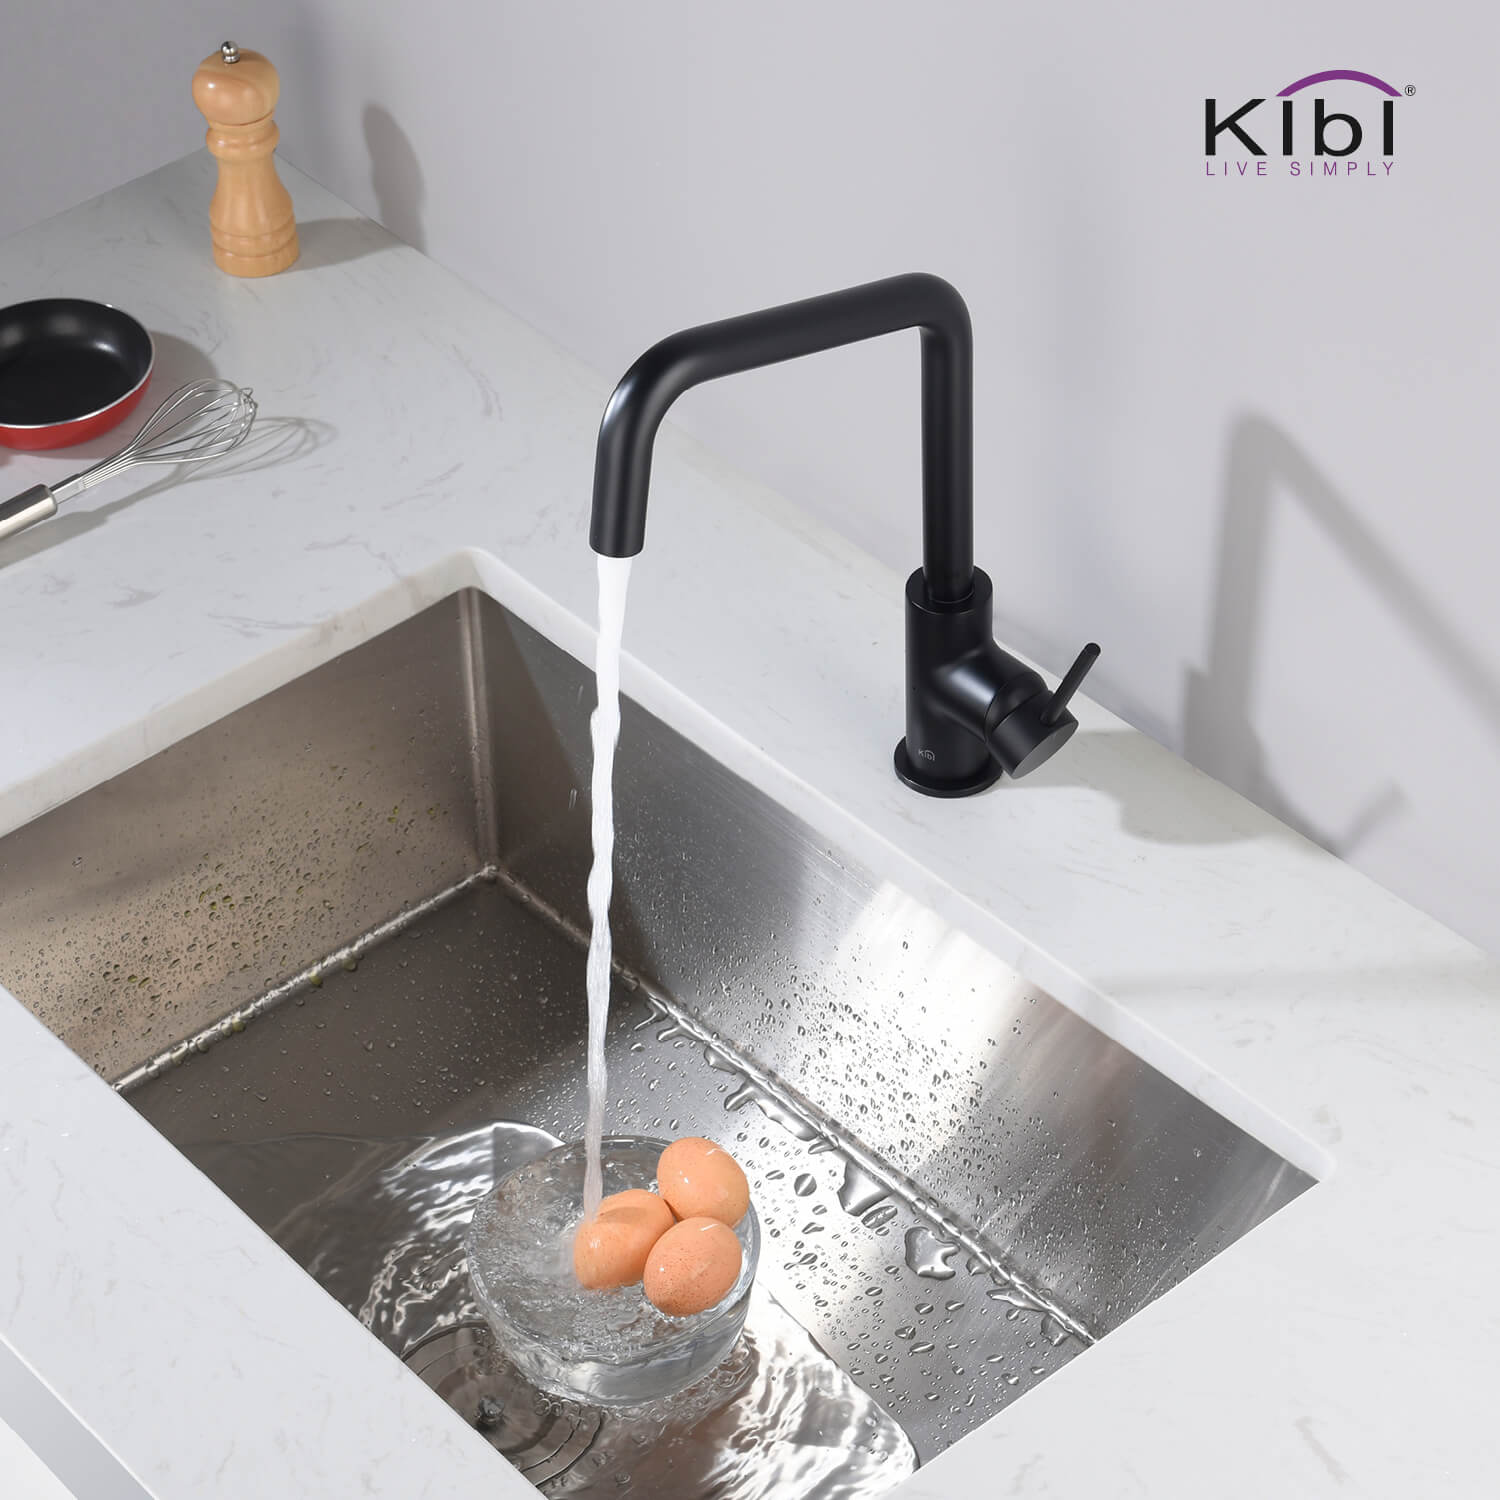 Kibi Macon Single Handle High Arc Kitchen Bar Sink Faucet With Soap Dispenser in Matte Black Finish